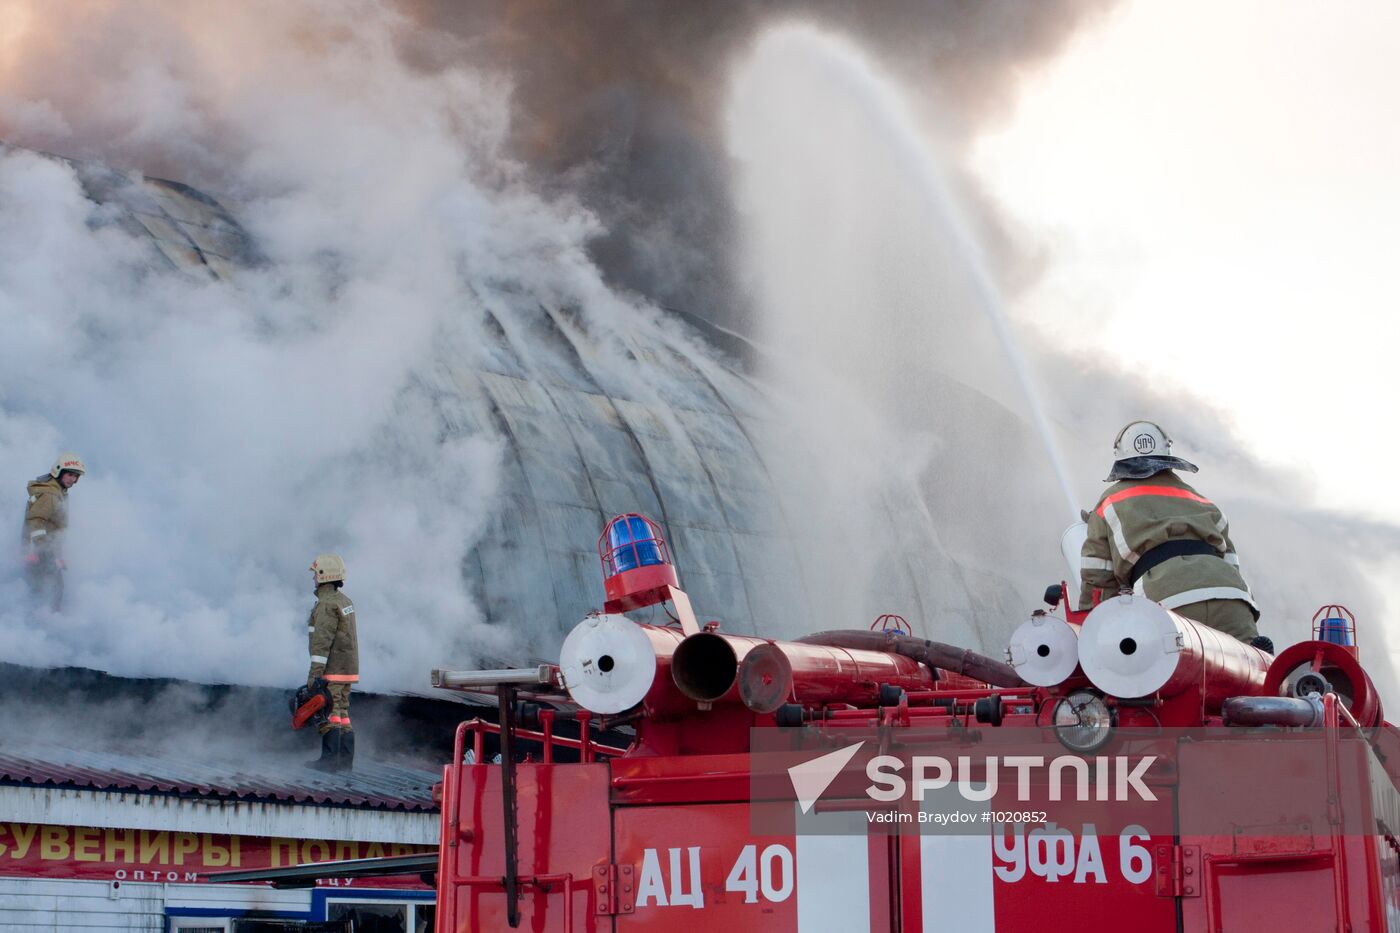 Fire at Demsky market, Ufa